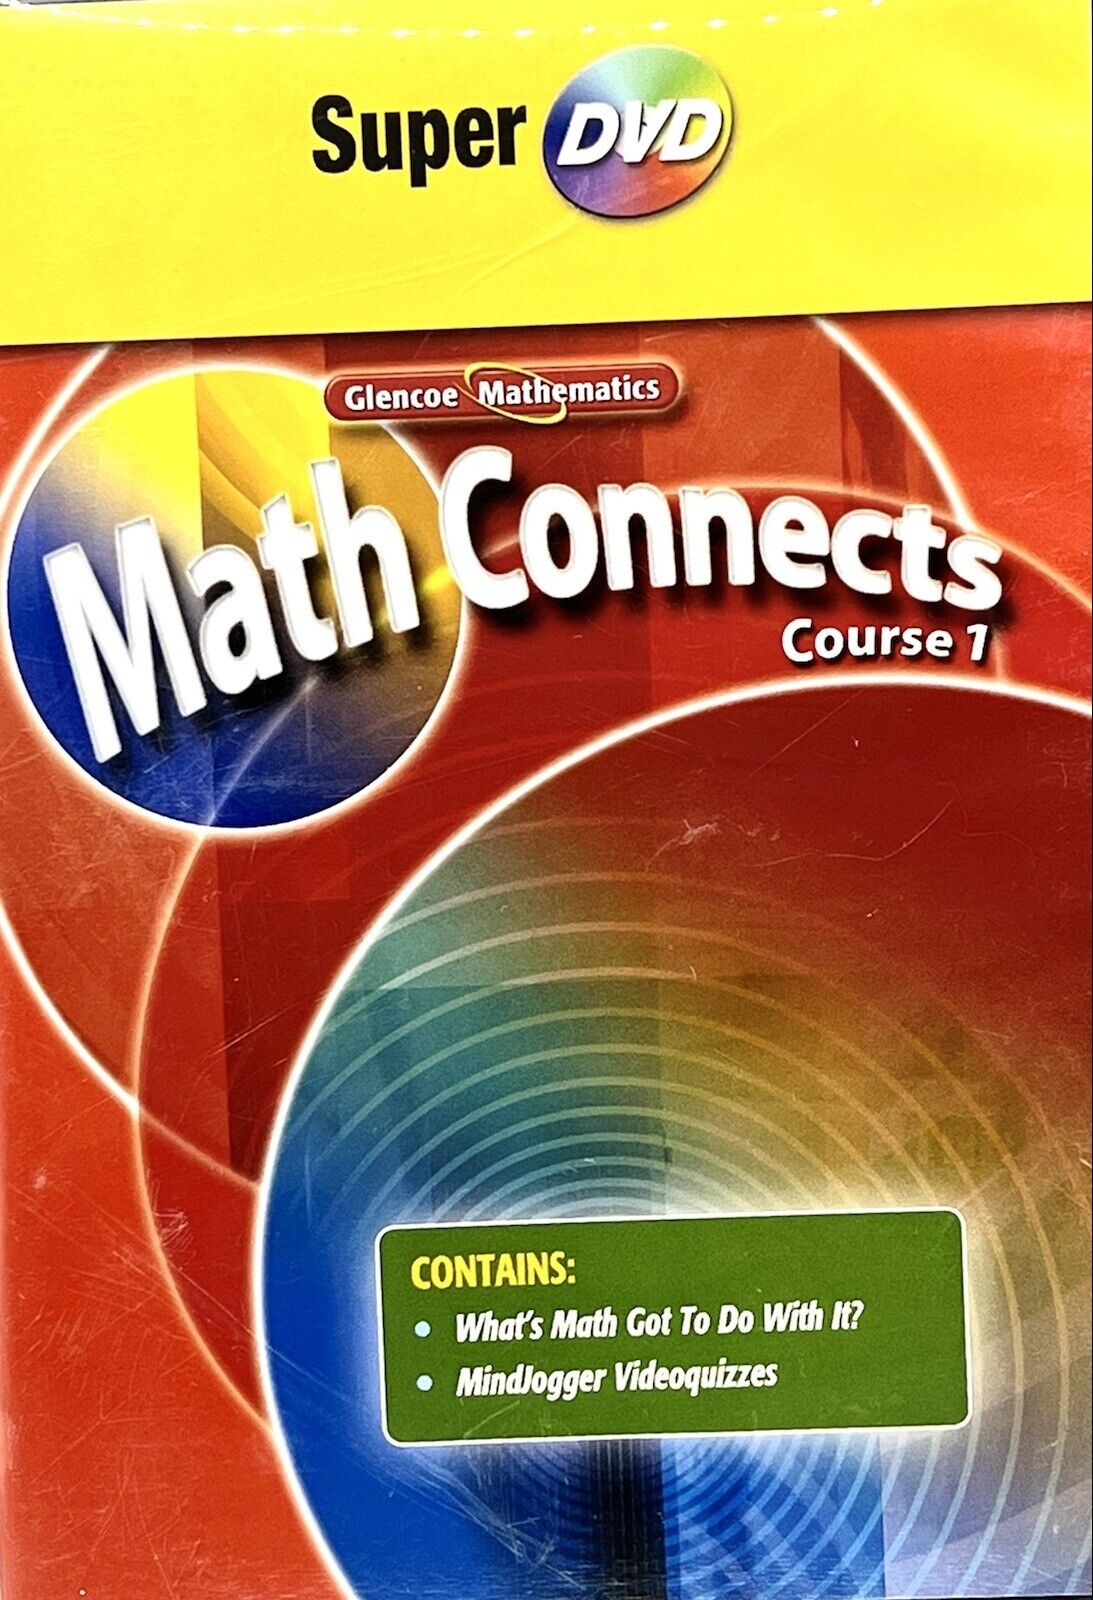 Math Connects: Course 1 - Glencoe Mathematics- Windows Mac: Super DVD - Glencoe